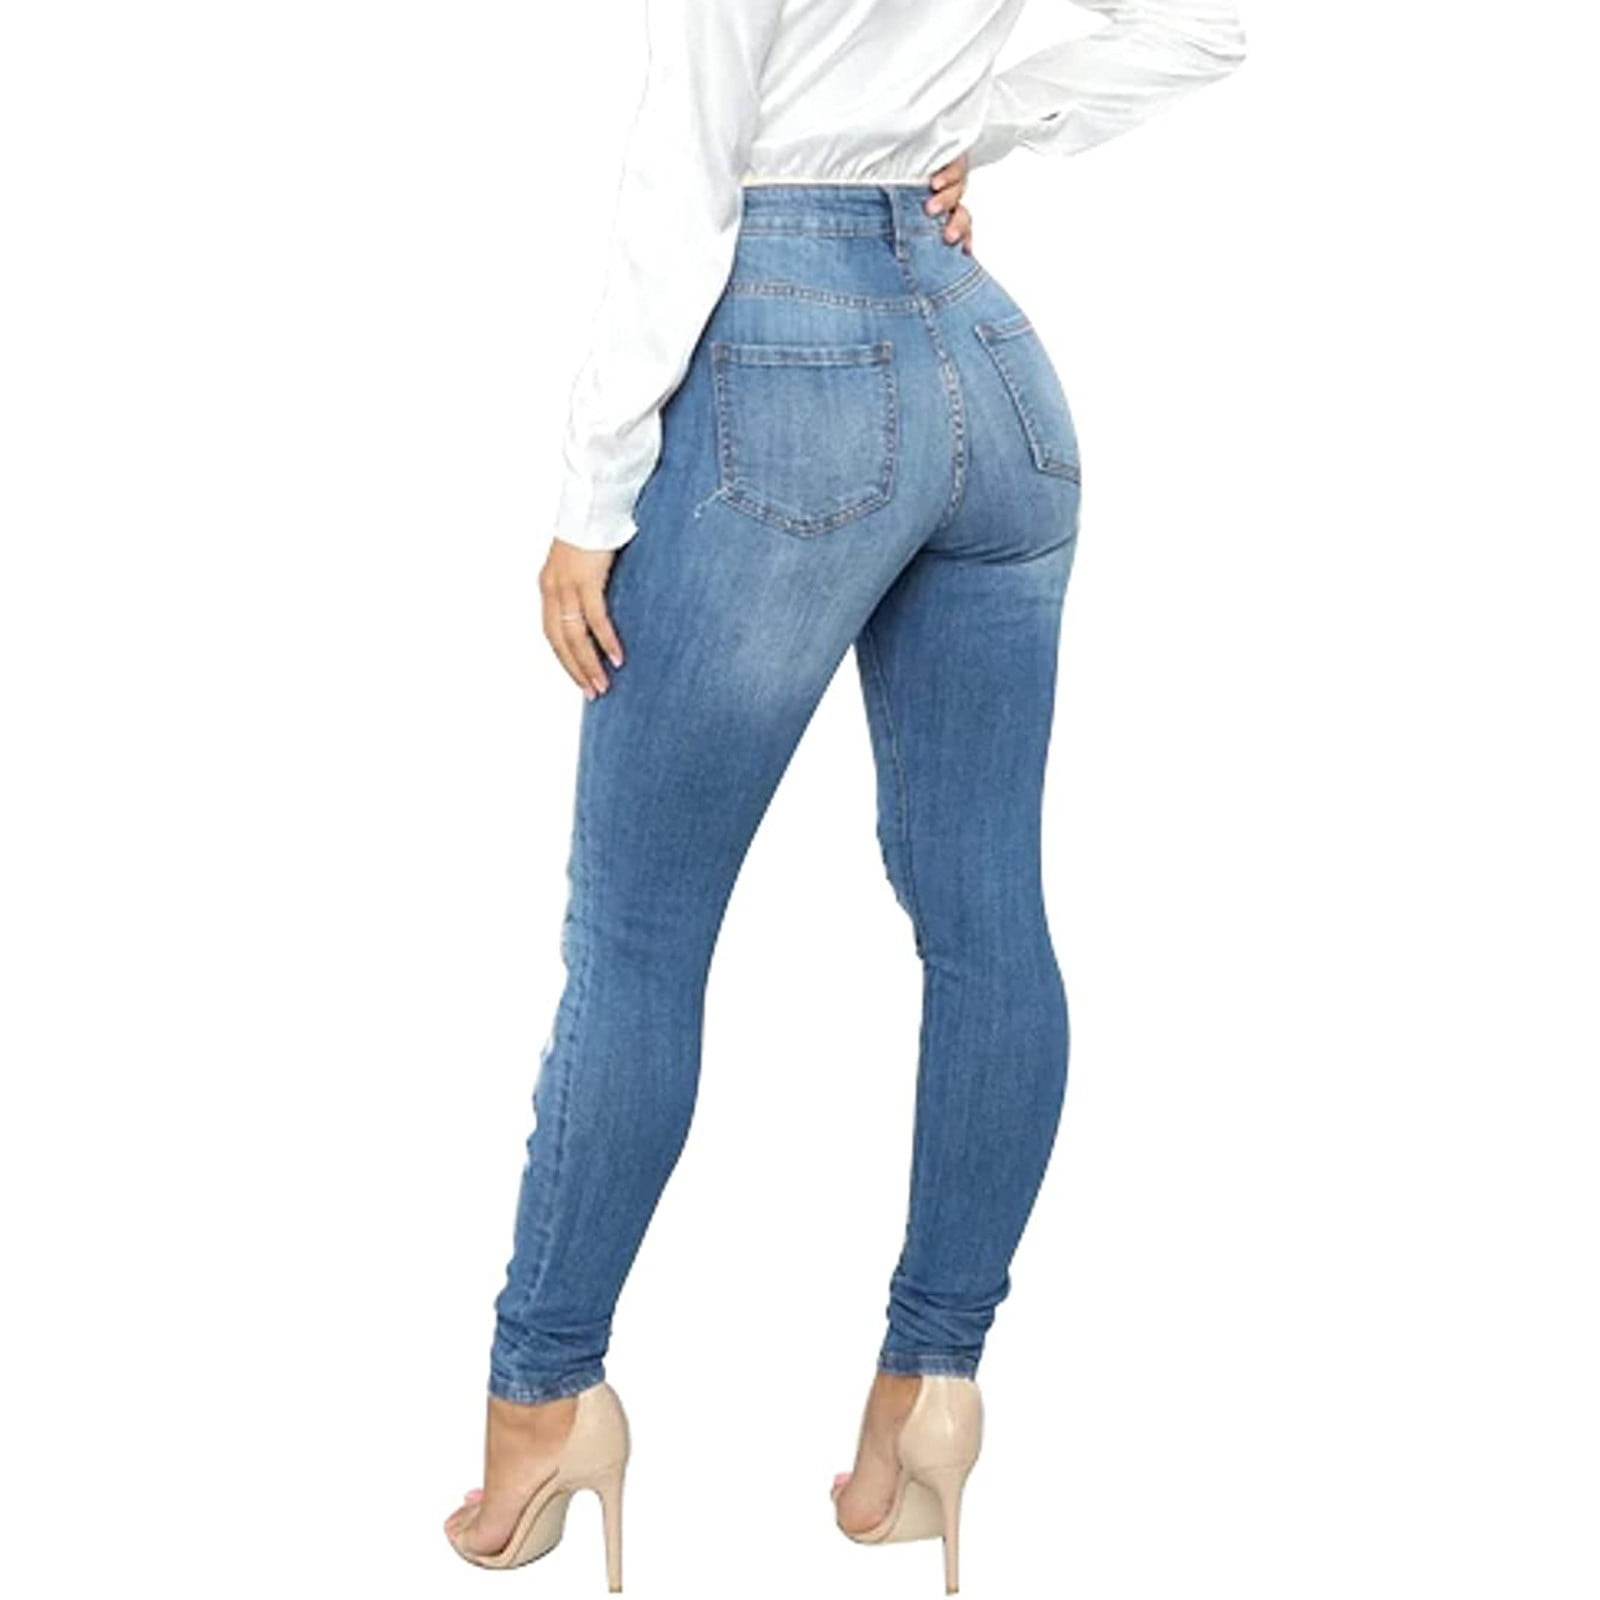 Plus Size Women's Distressed Jeans | Symbol Of Status Jeans | Chic Soul